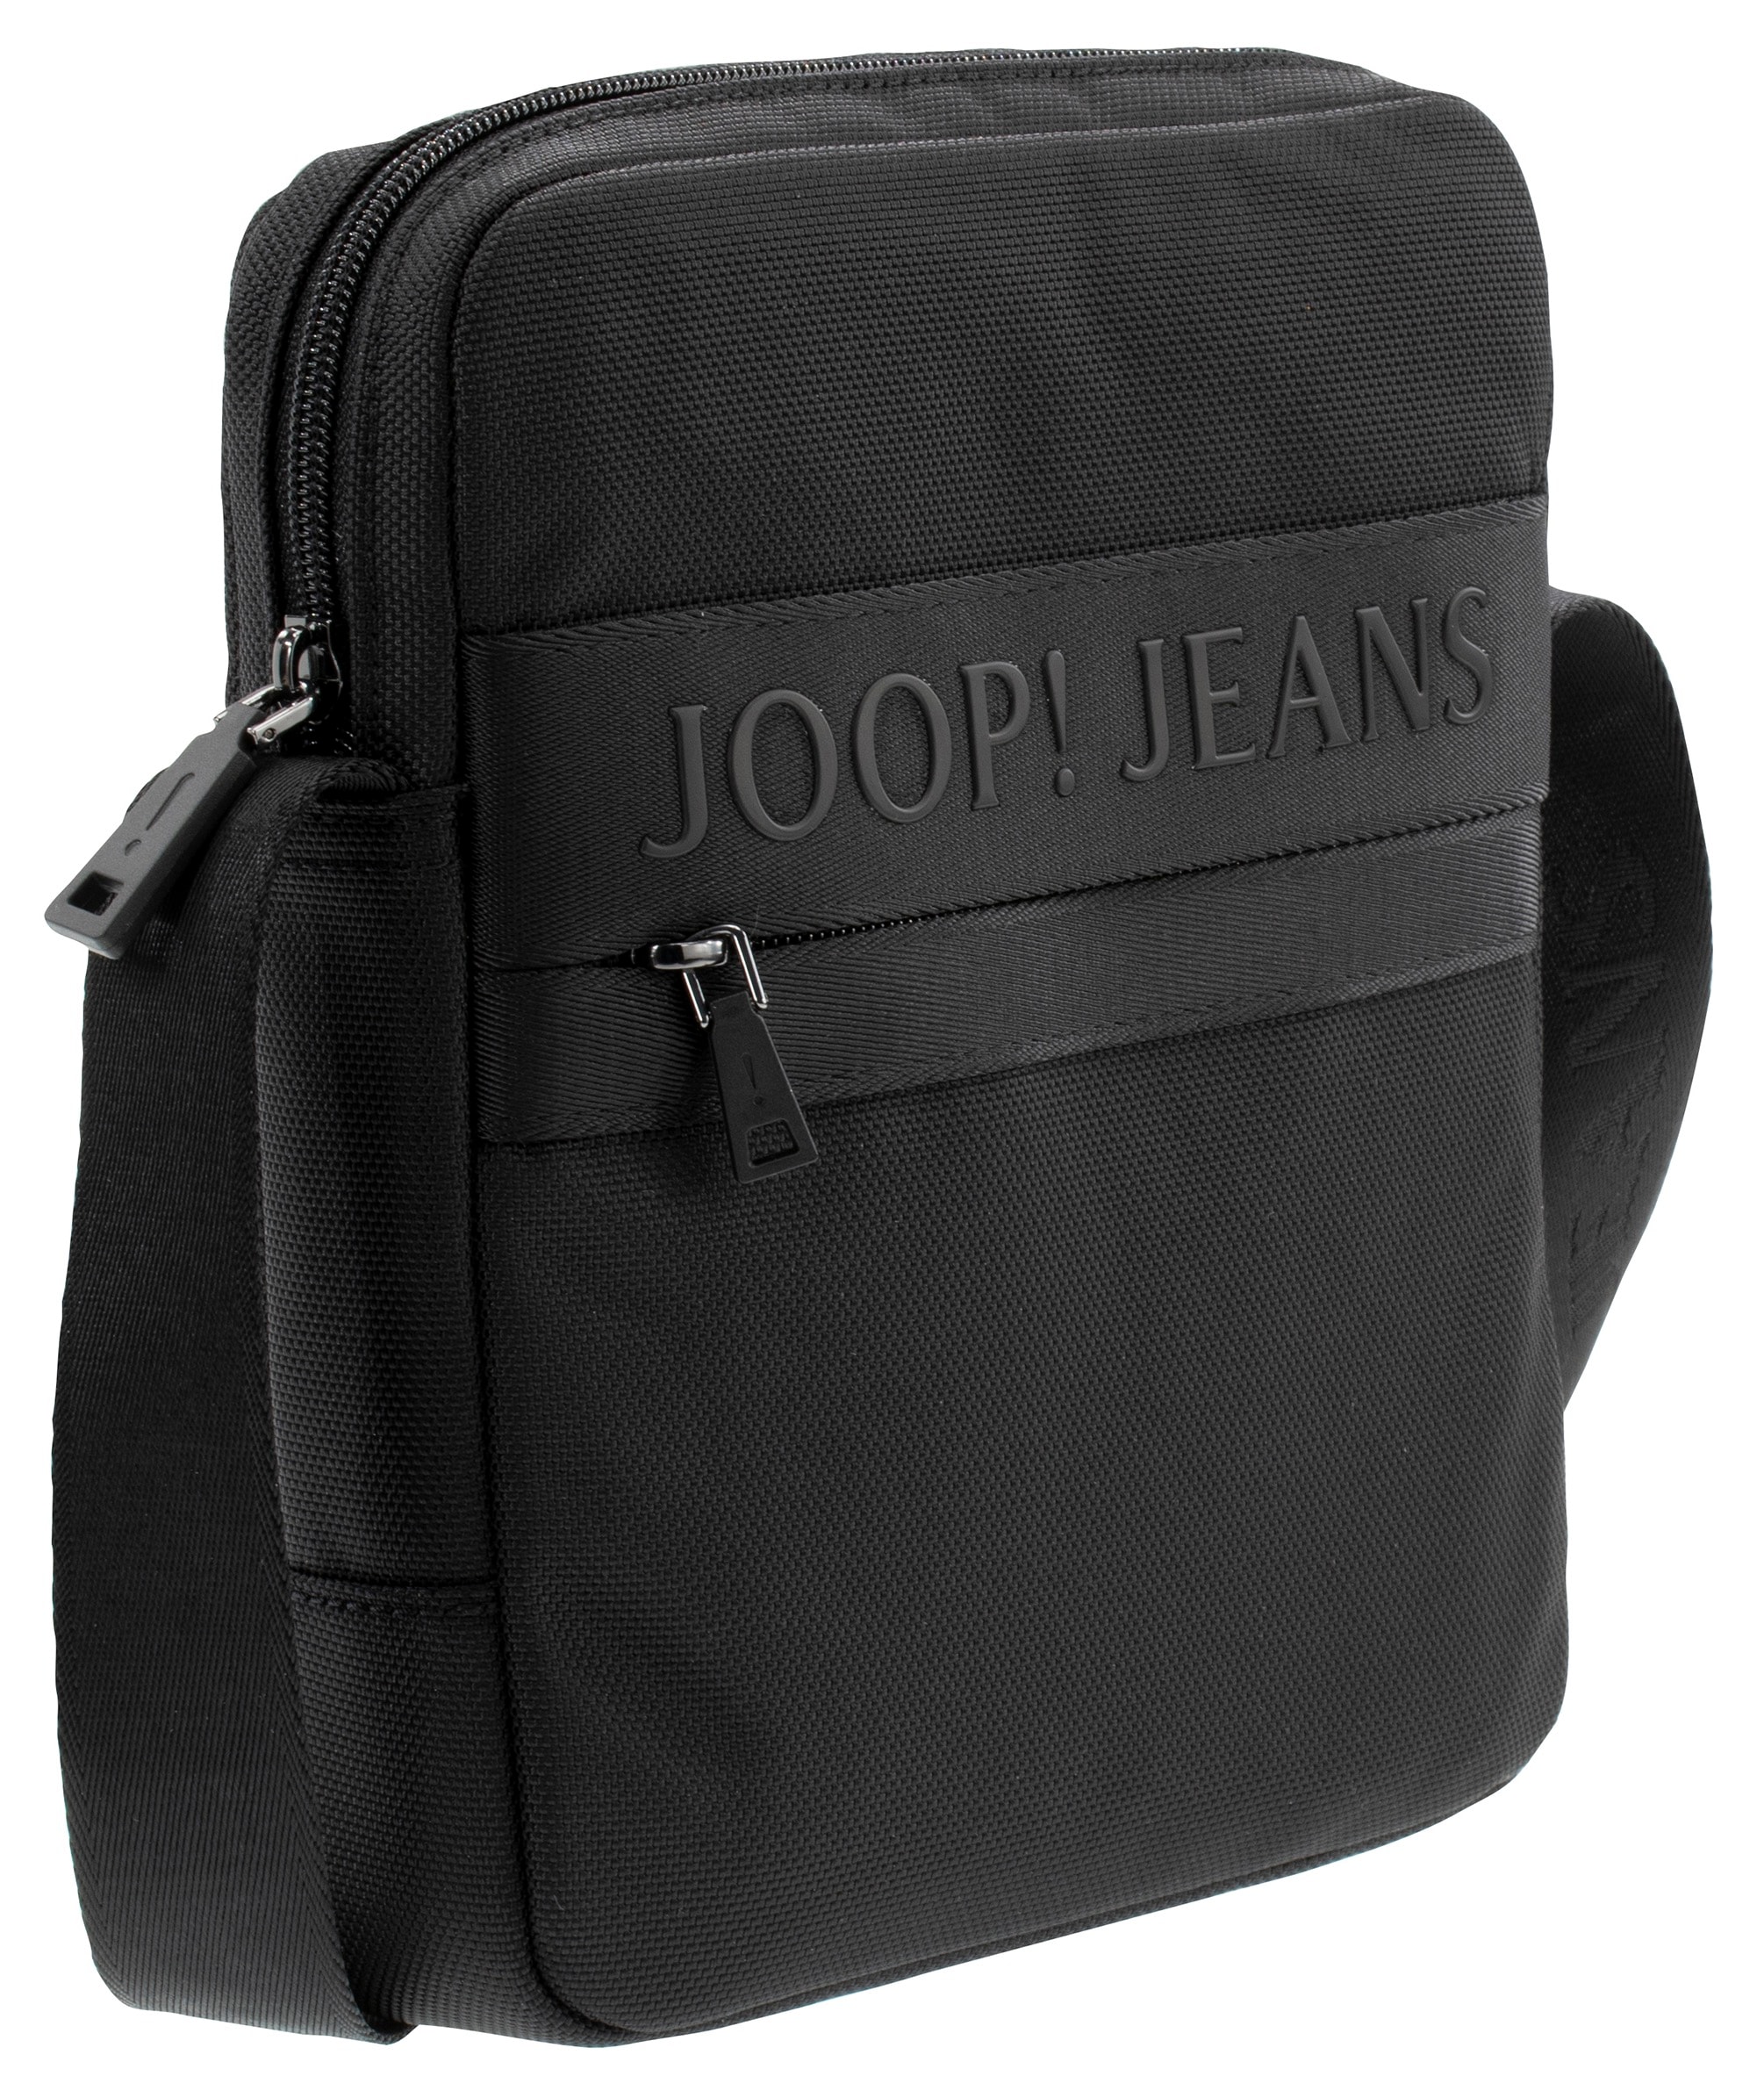 Joop Jeans Umhängetasche »modica milo shoulderbag xsvz«, mit Reissverschluss-Rückfach